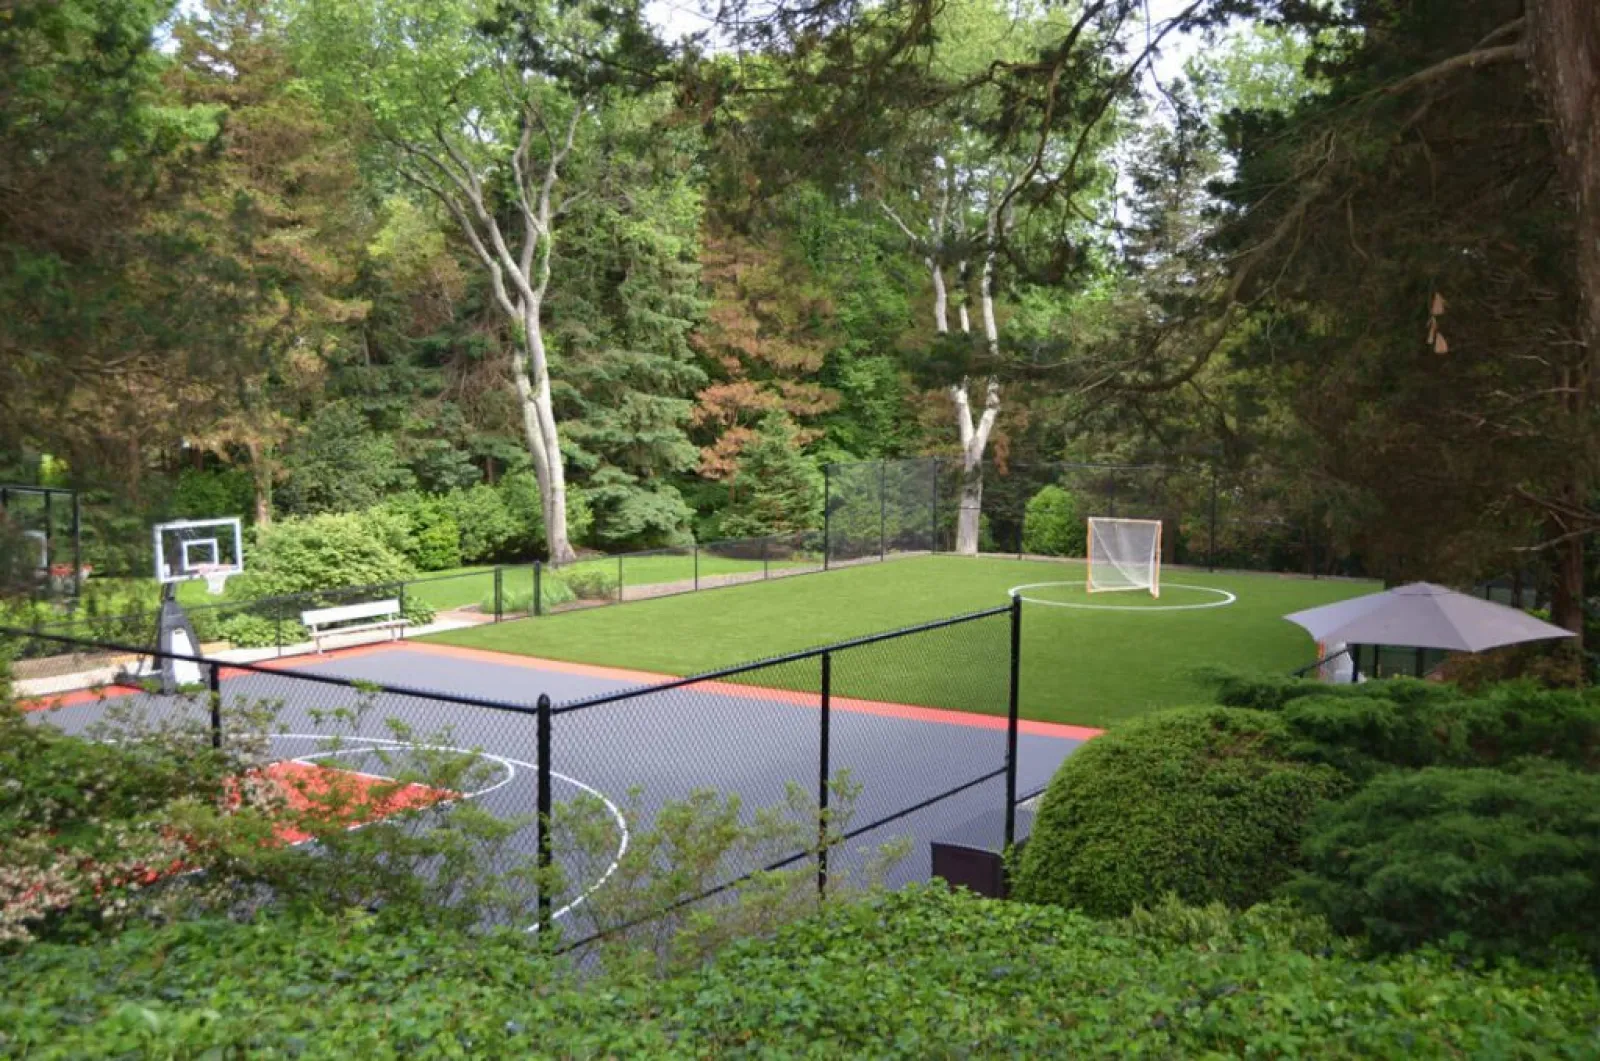 a tennis court in a park